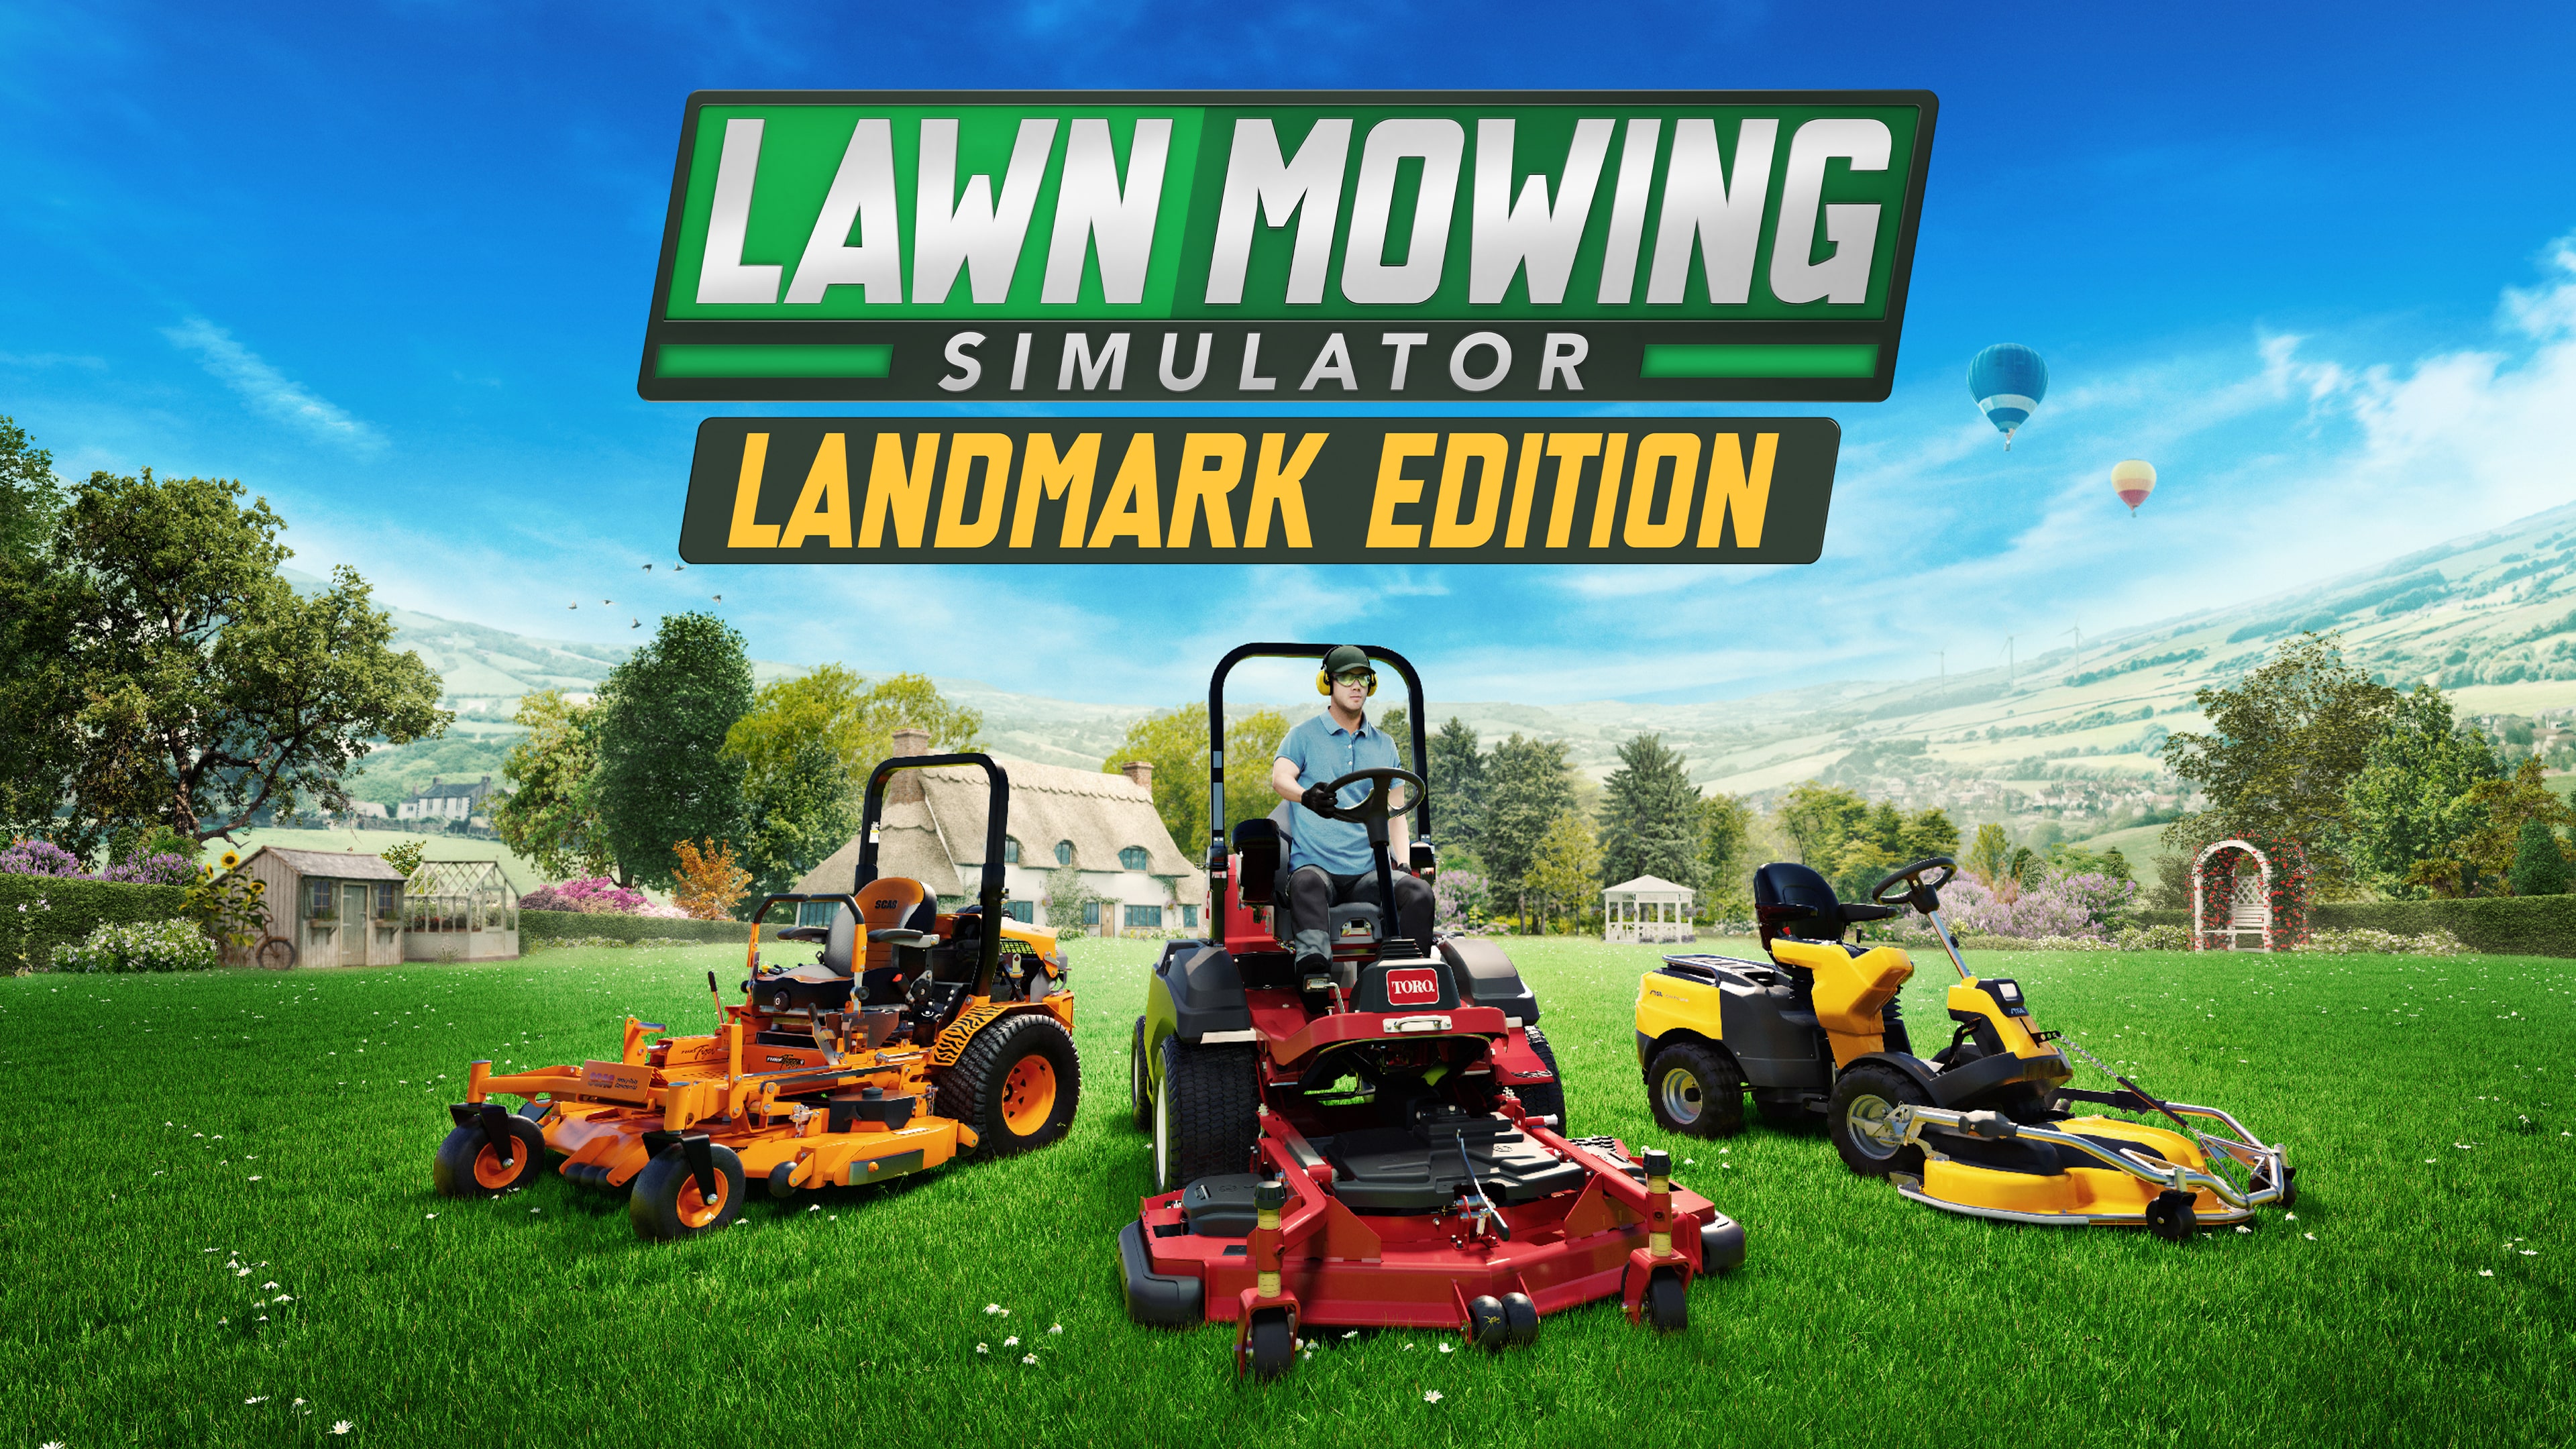 Lawn Mowing Simulator: Landmark Edition (日语, 韩语, 简体中文, 繁体中文, 英语)